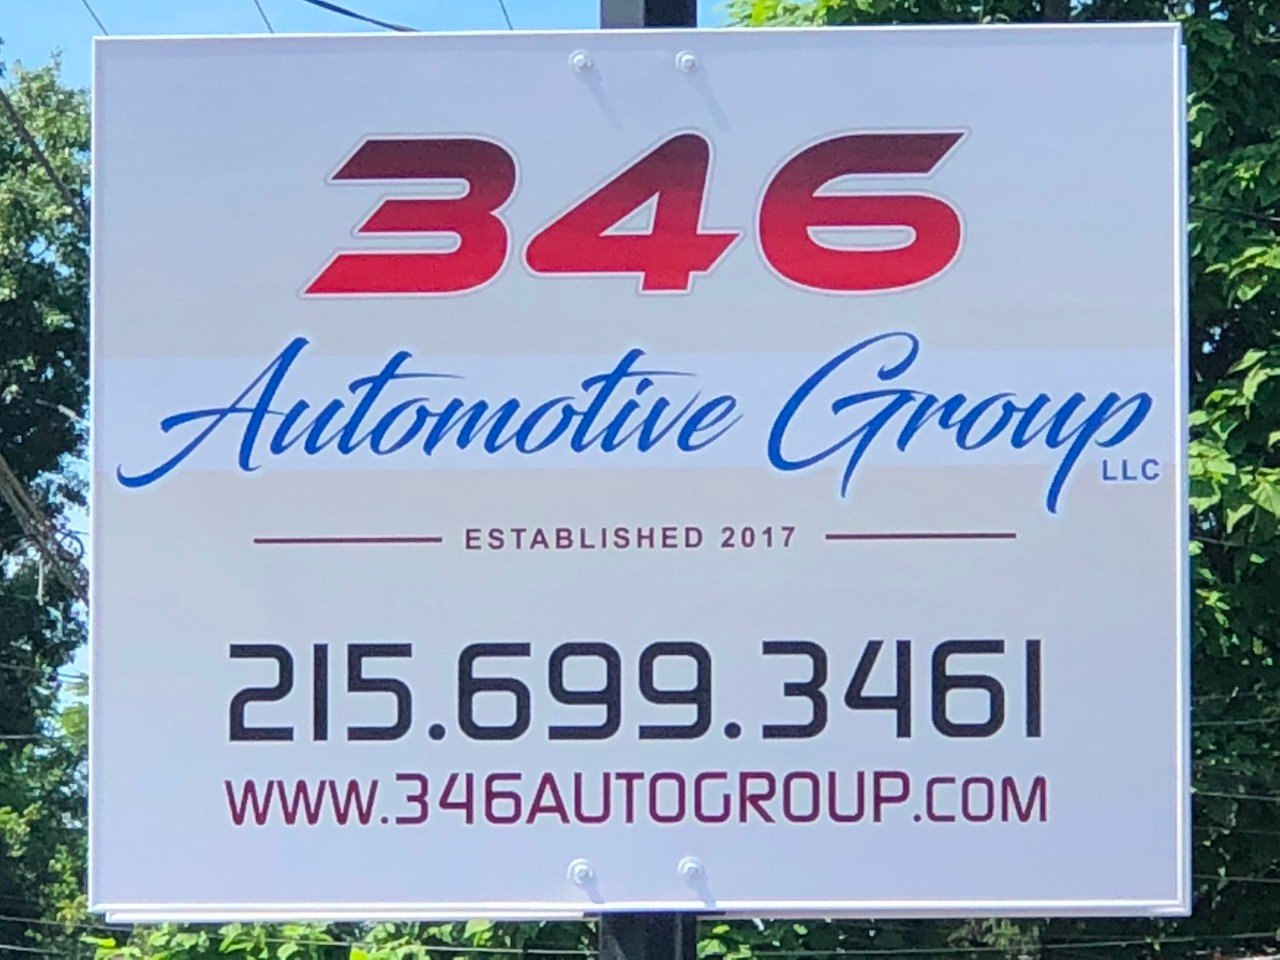 346 AUTOMOTIVE GROUP LLC